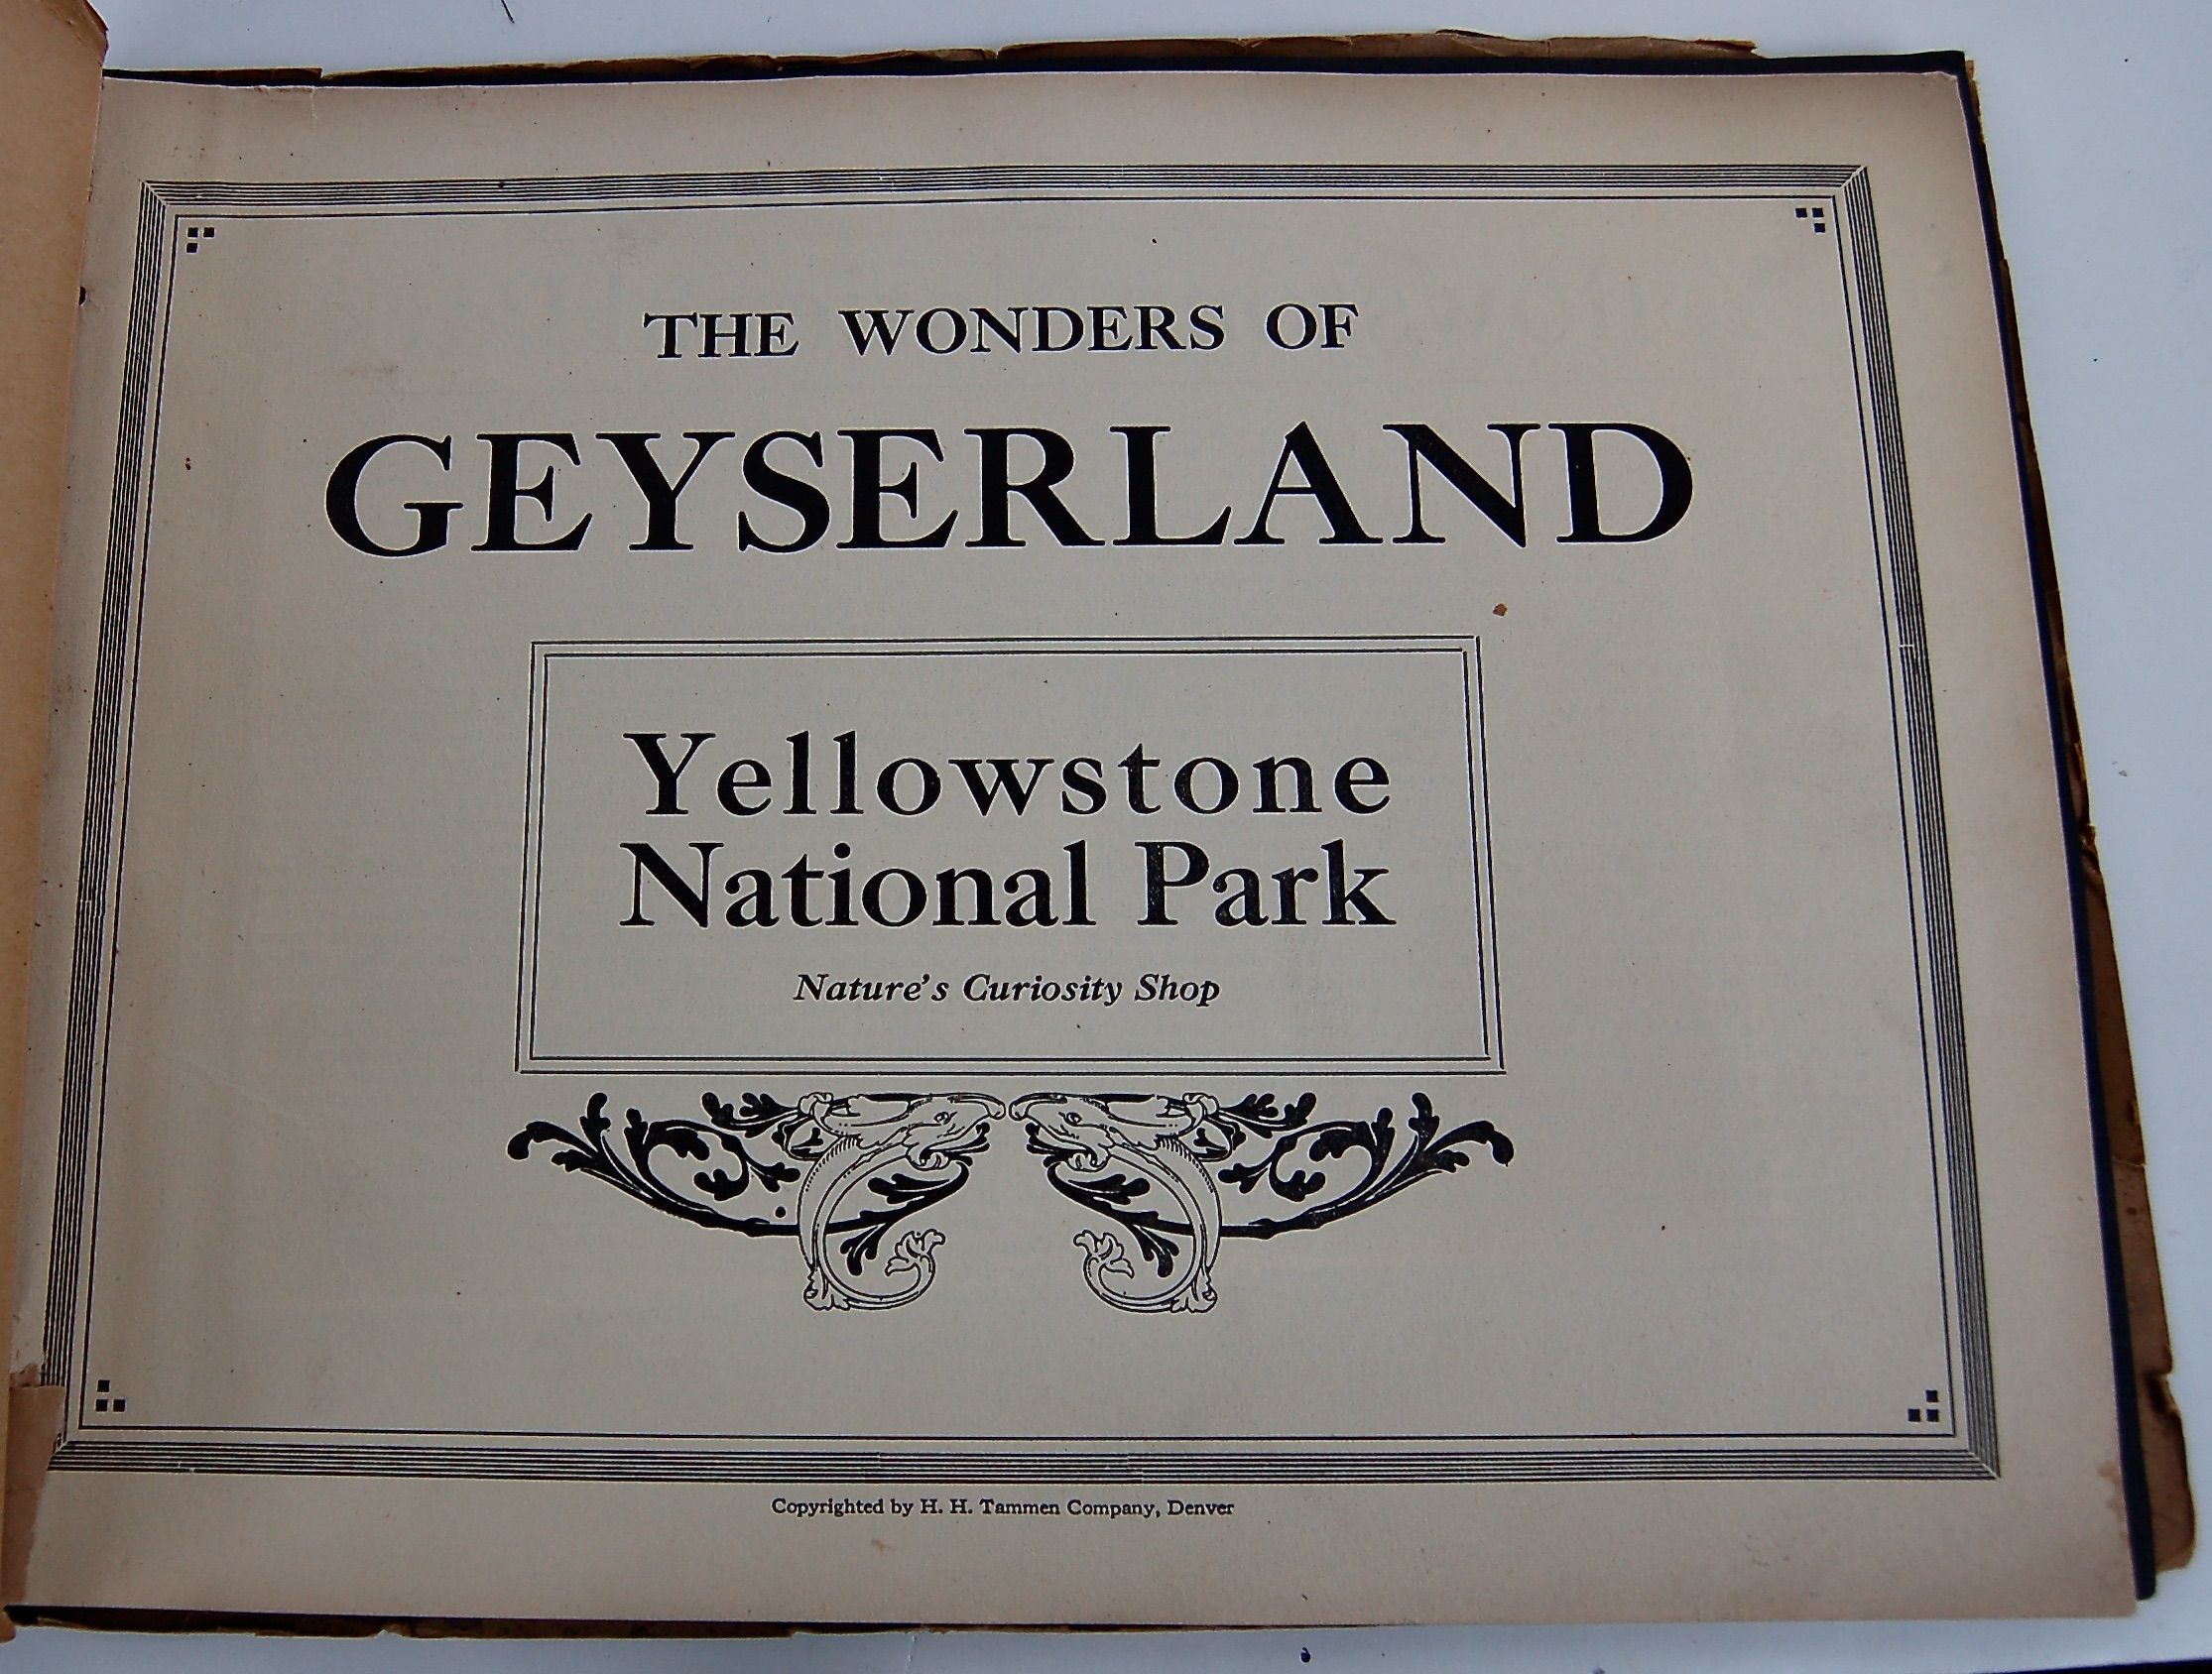 The Wonders of Geyserland, Yellowstone.